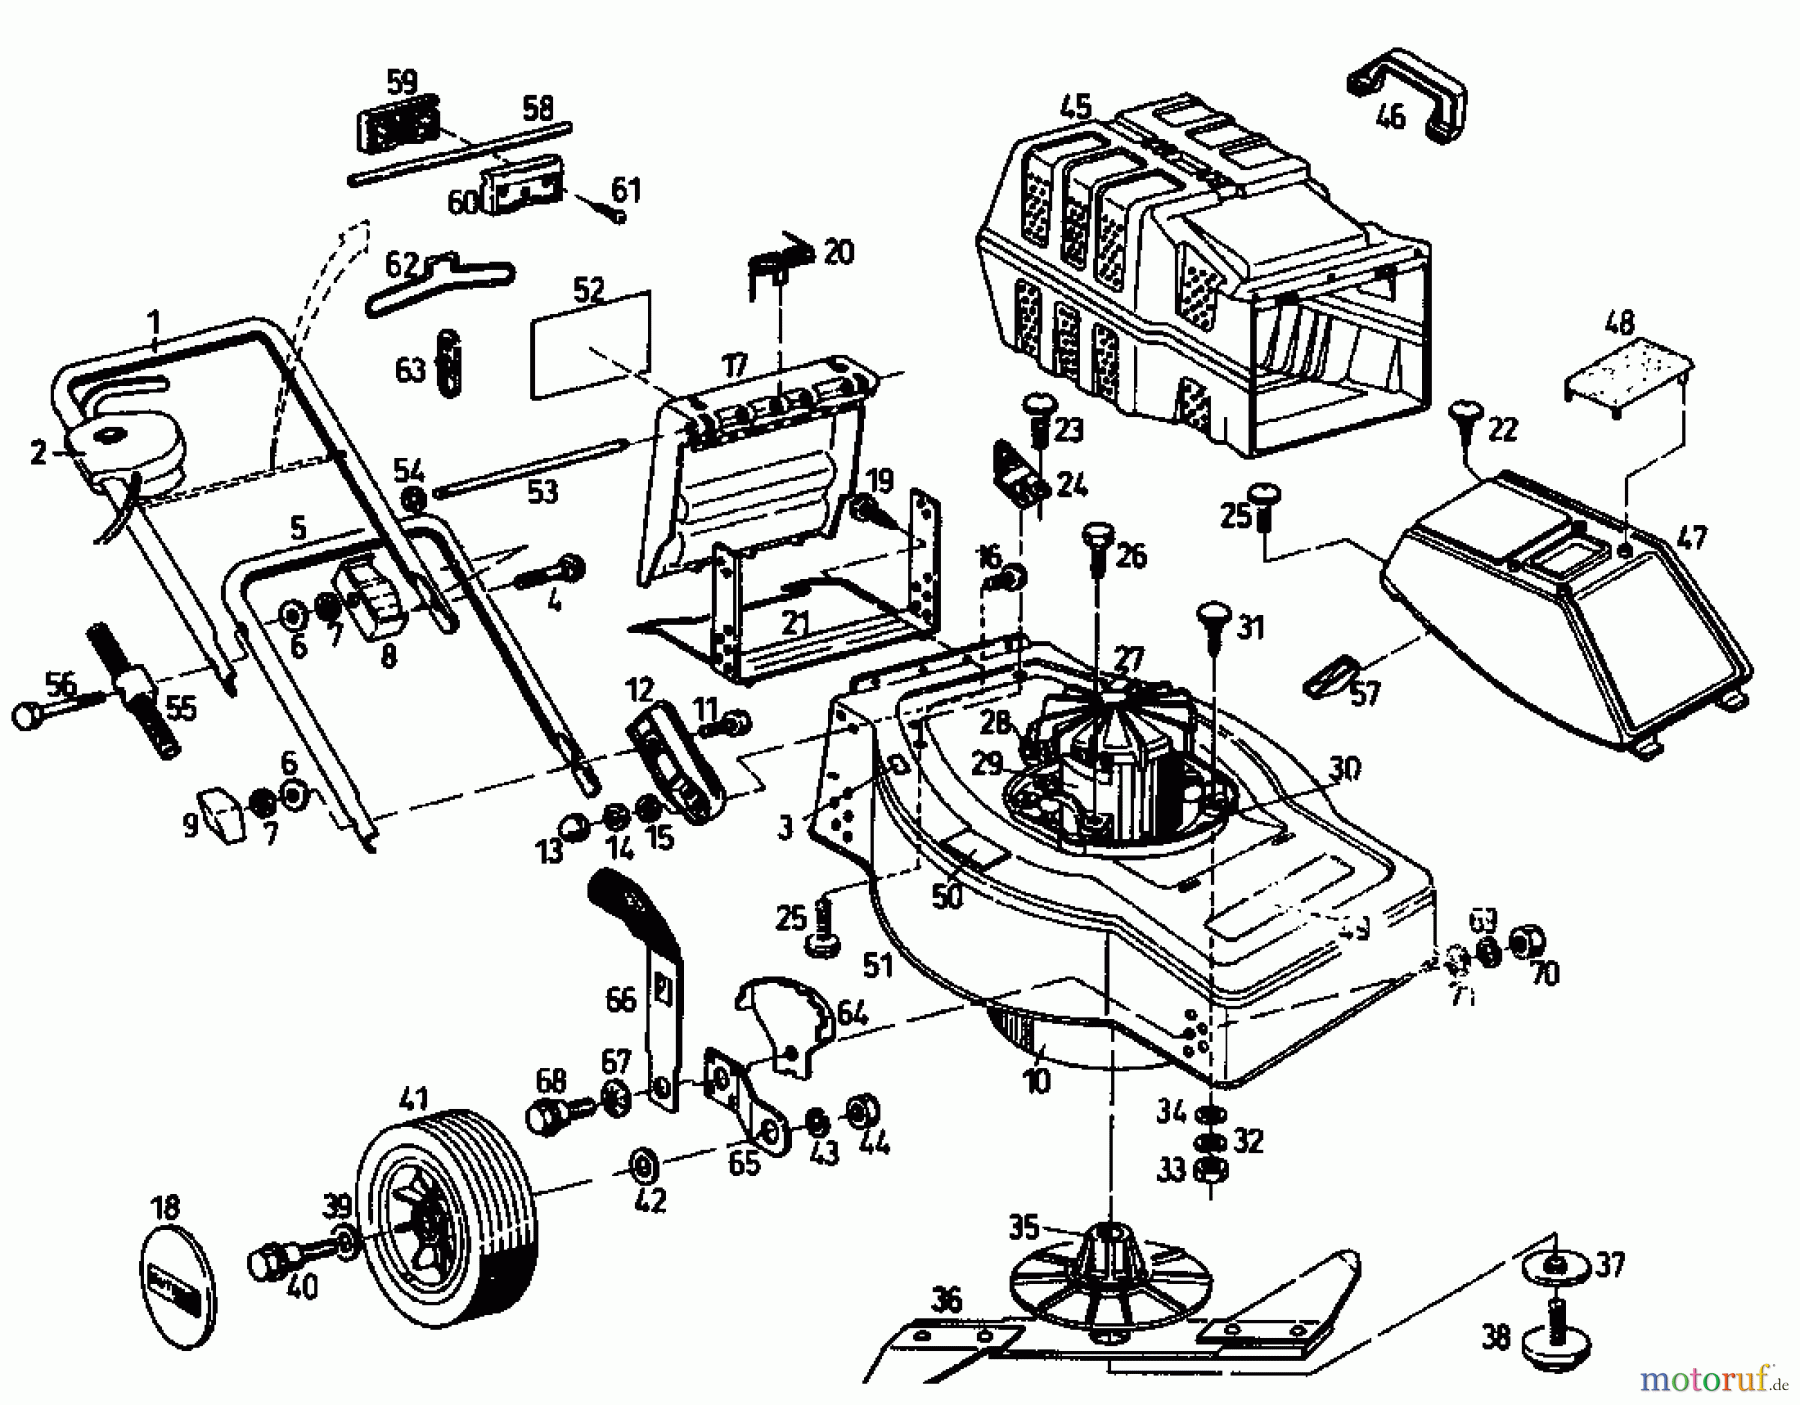  Gutbrod Electric mower TURBO HE 02899.07  (1993) Basic machine